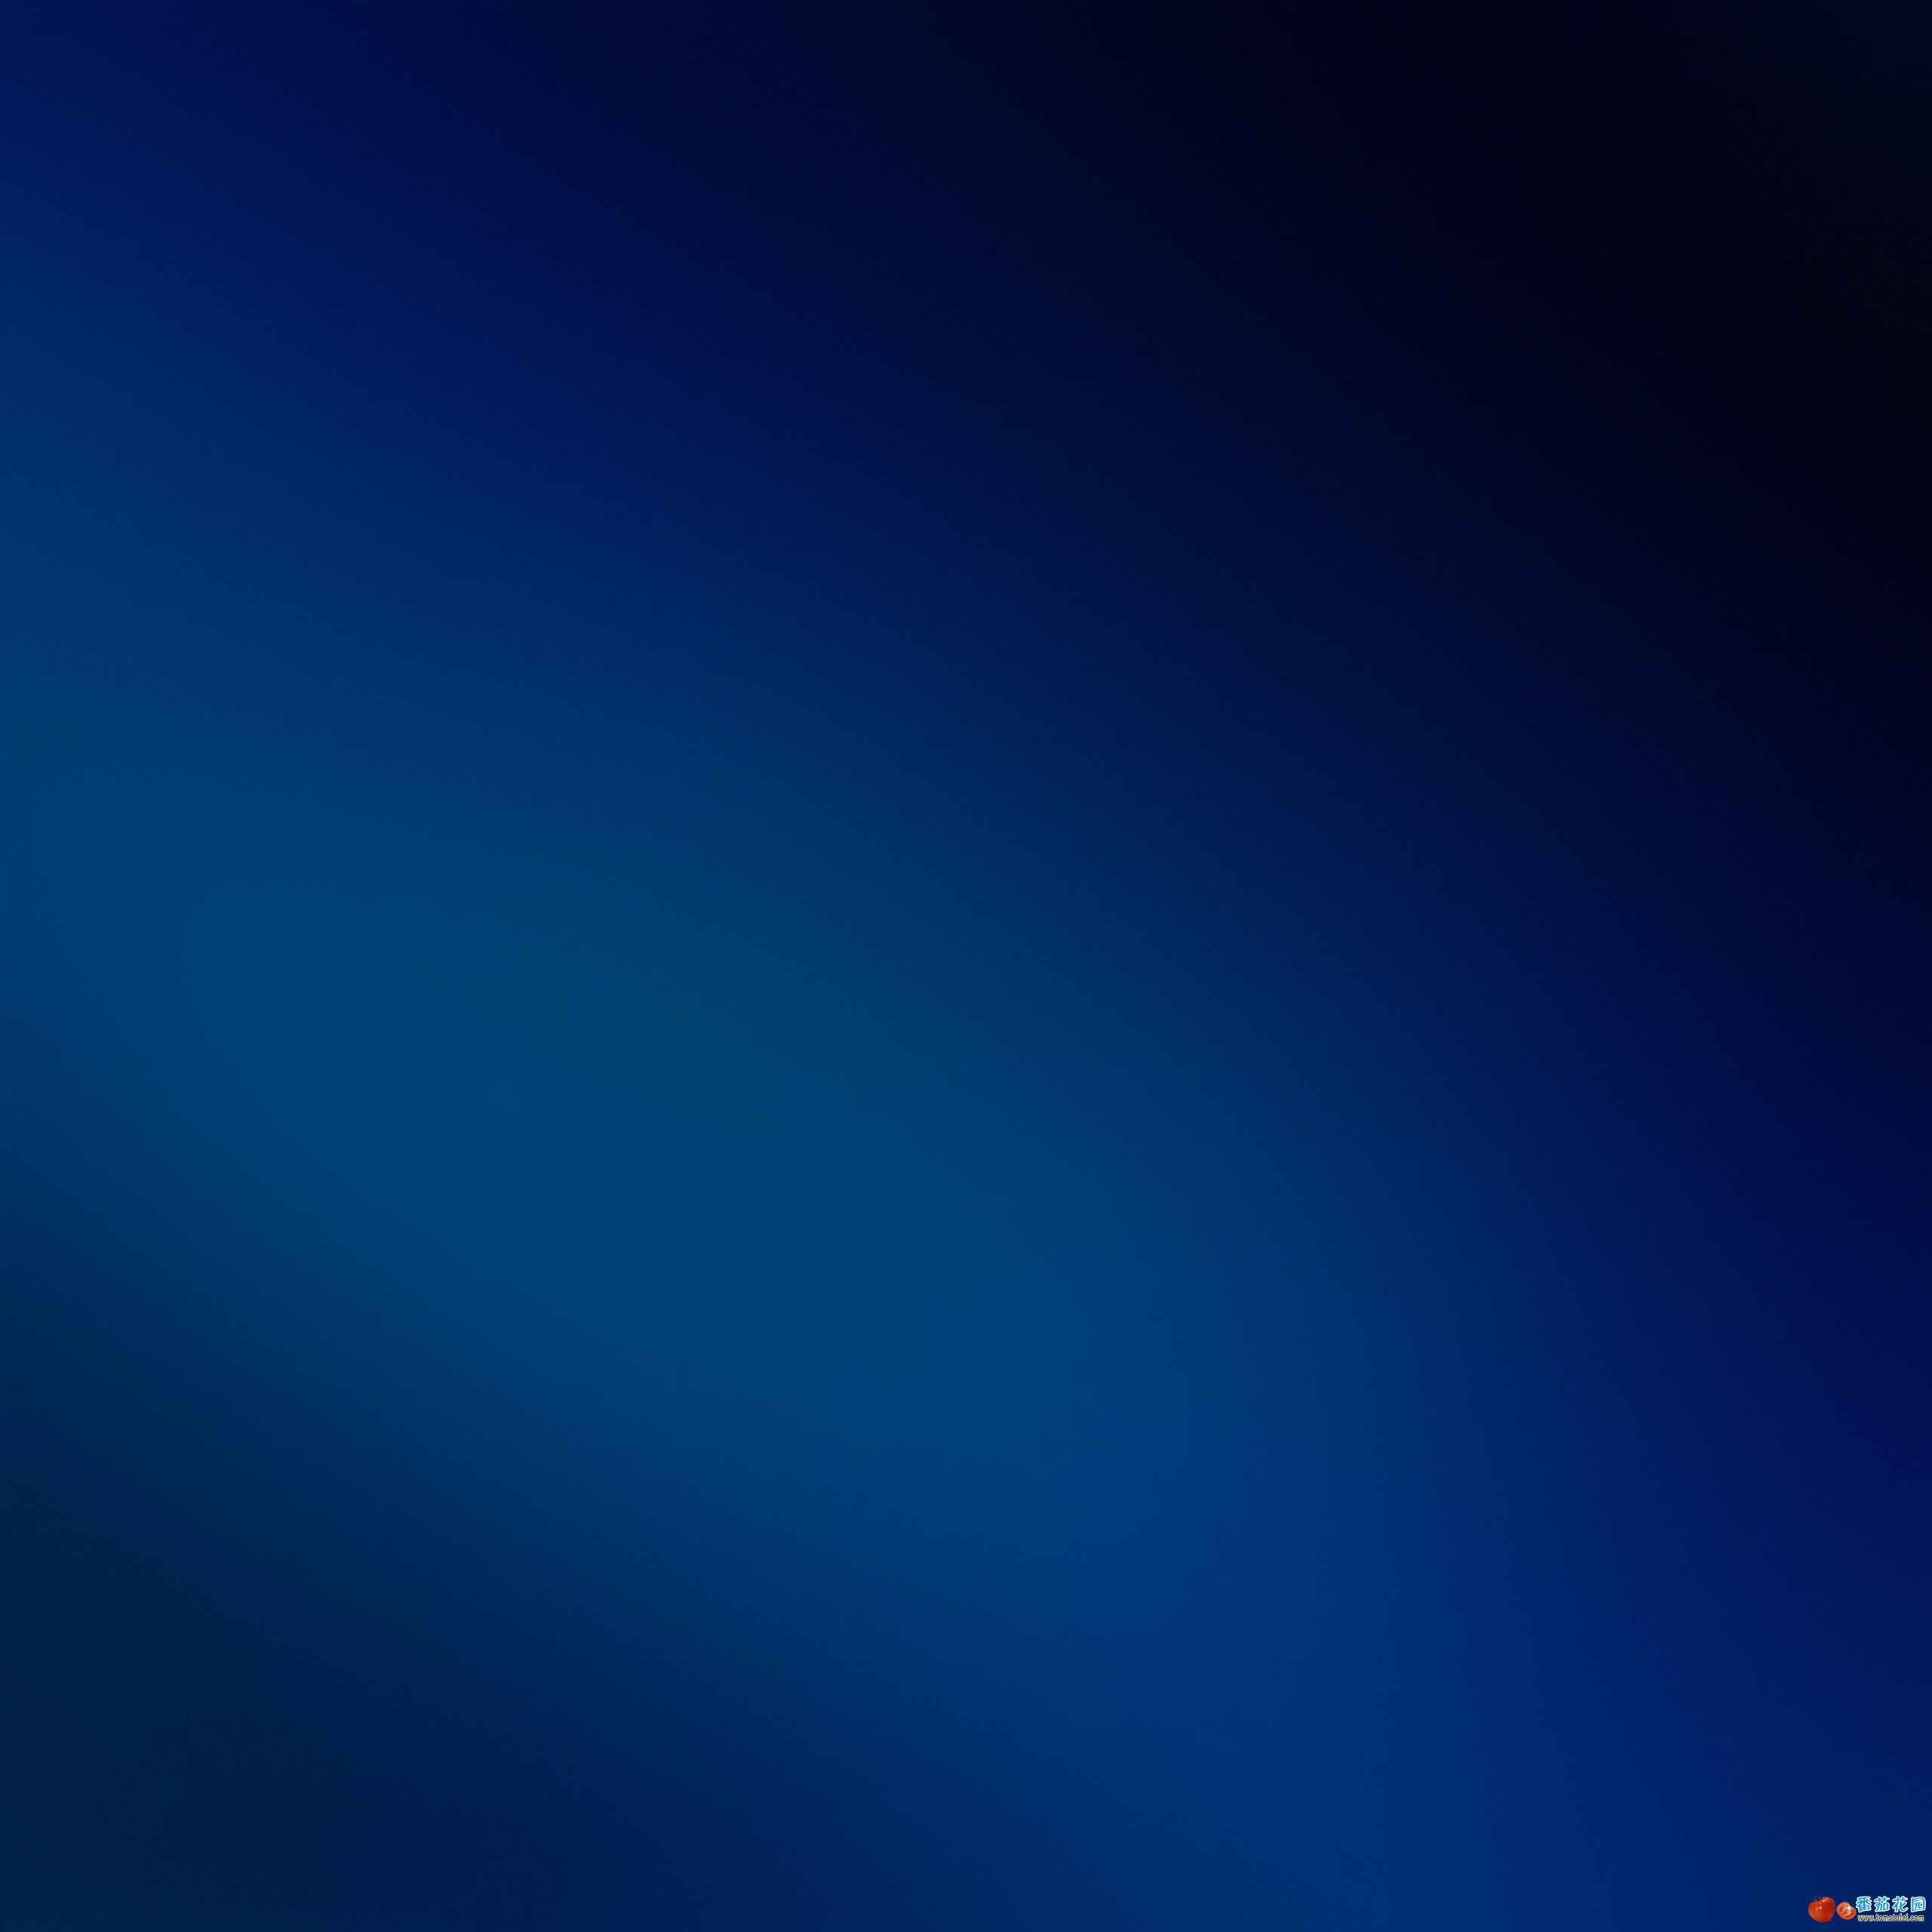 default_wallpaper_blue.png